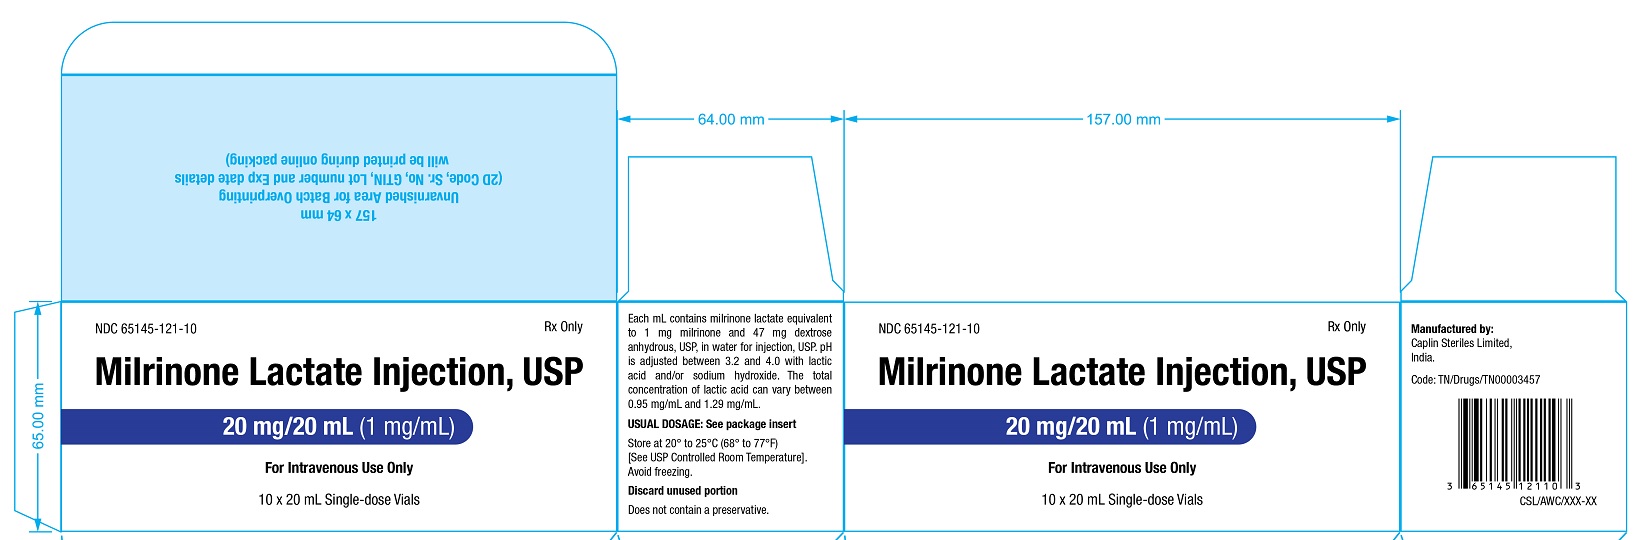 Milrinone-Lactate-spl-20ml-carton